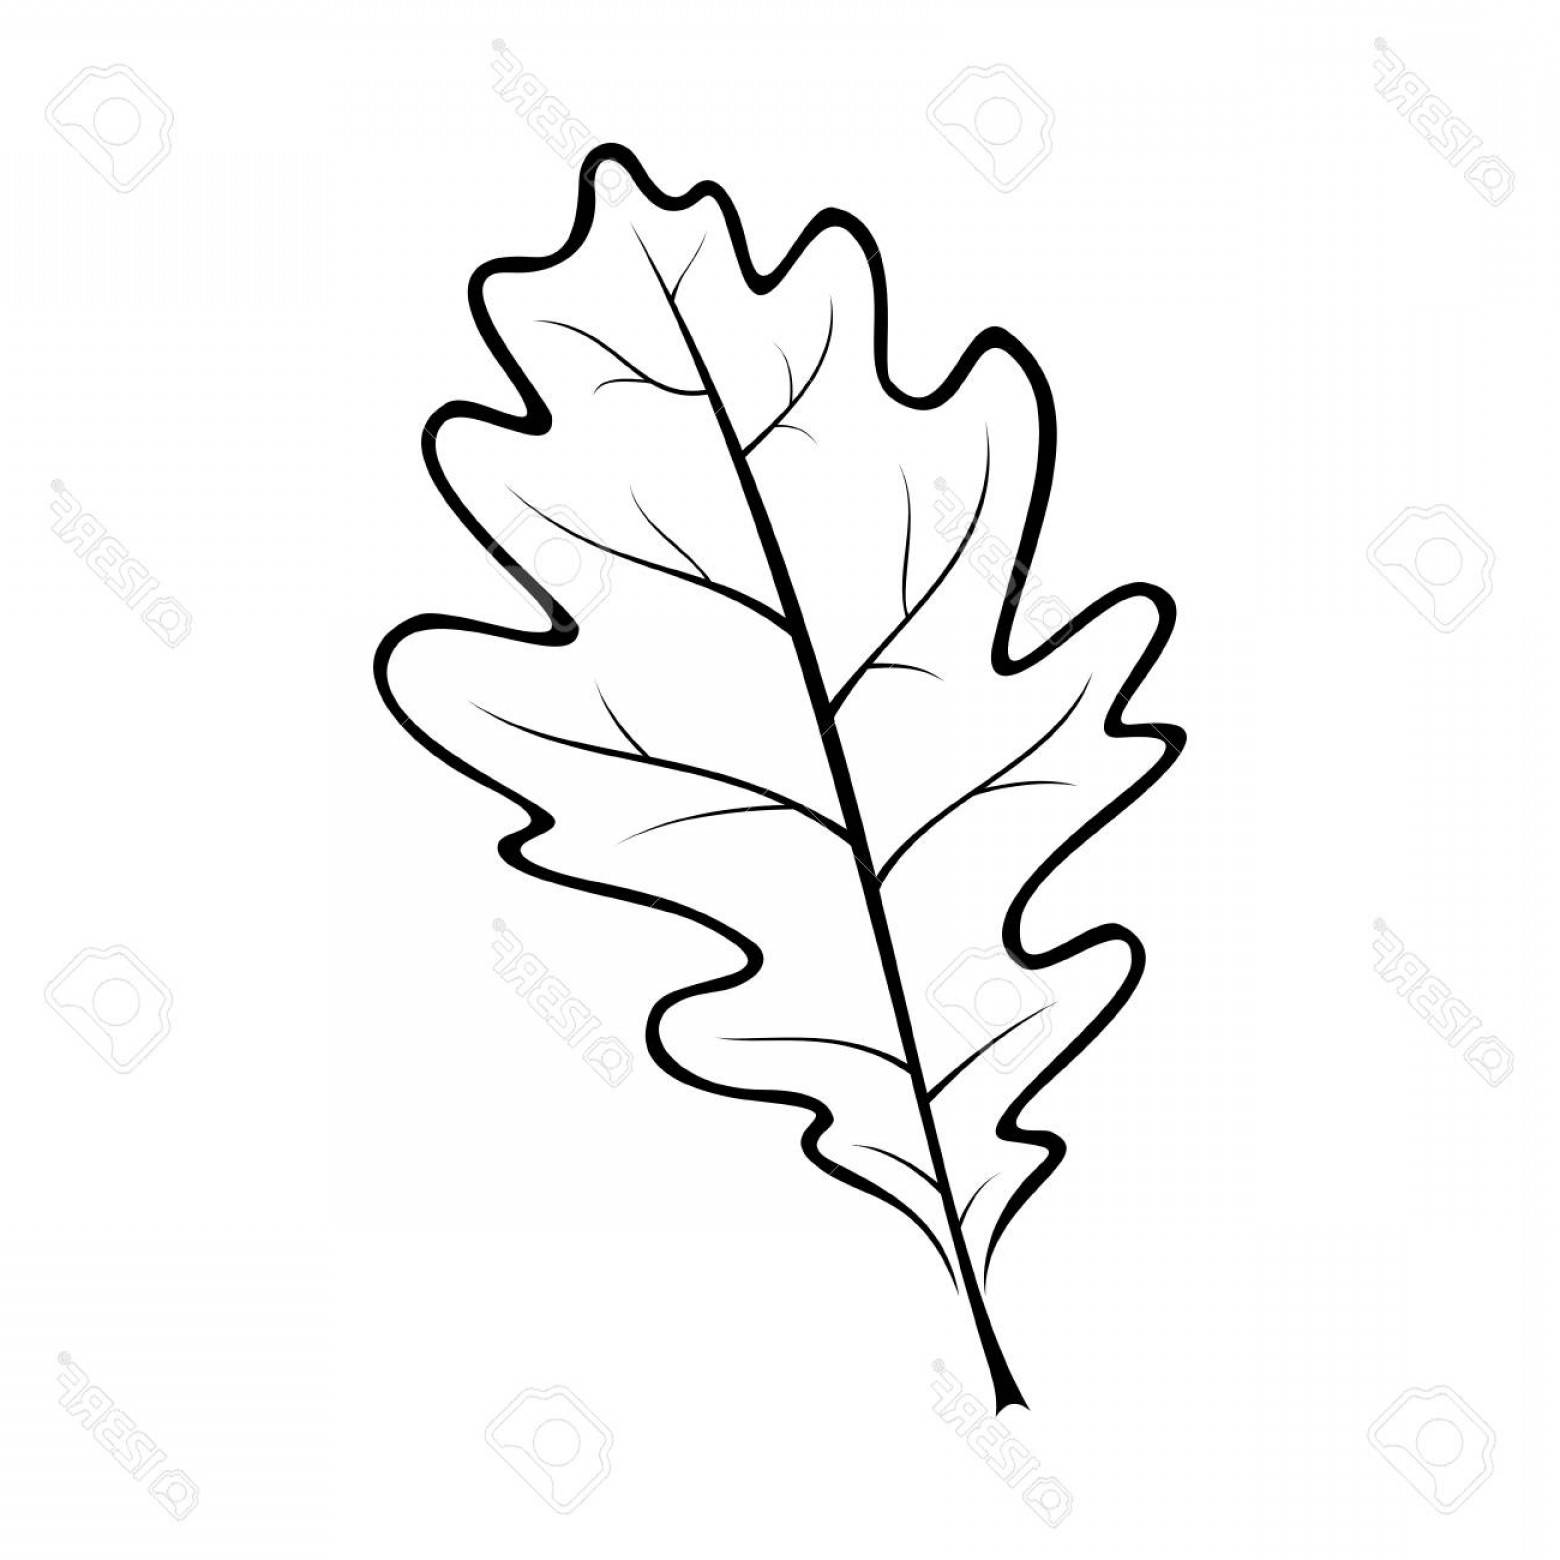 Black And White Vector Oak Leaf Art.